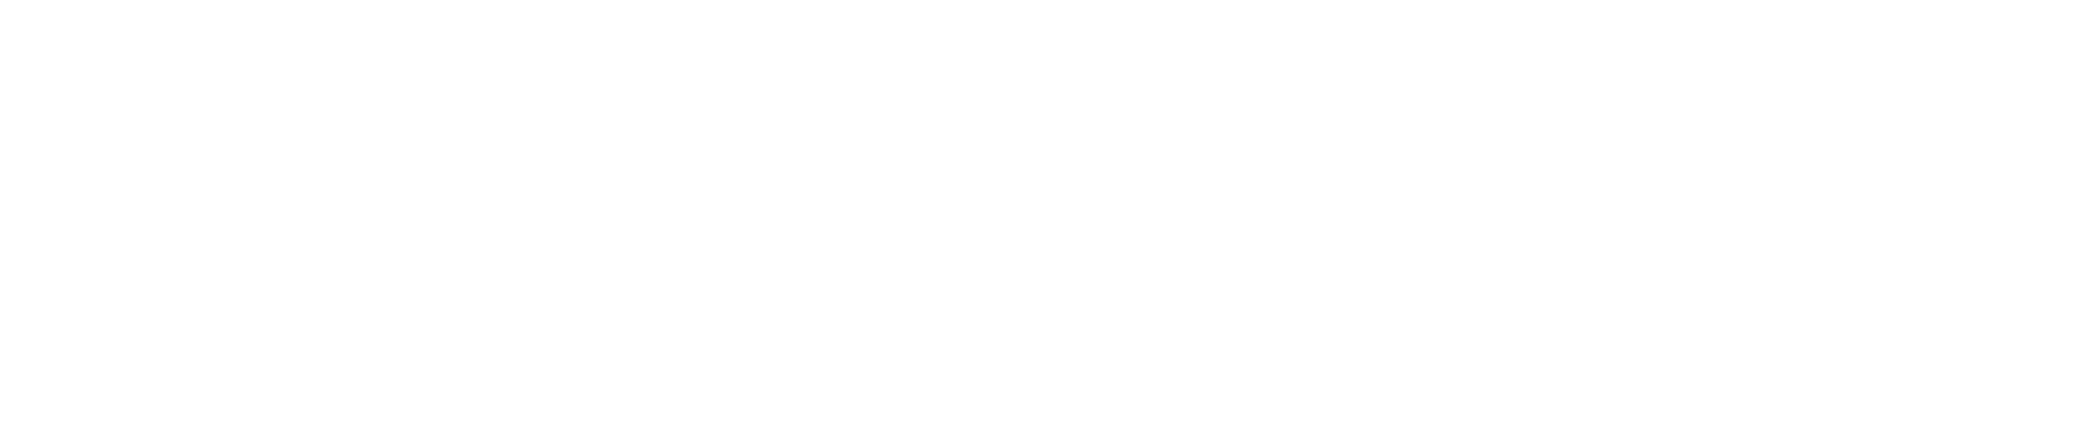 Betterview by Nearmap Logo_white